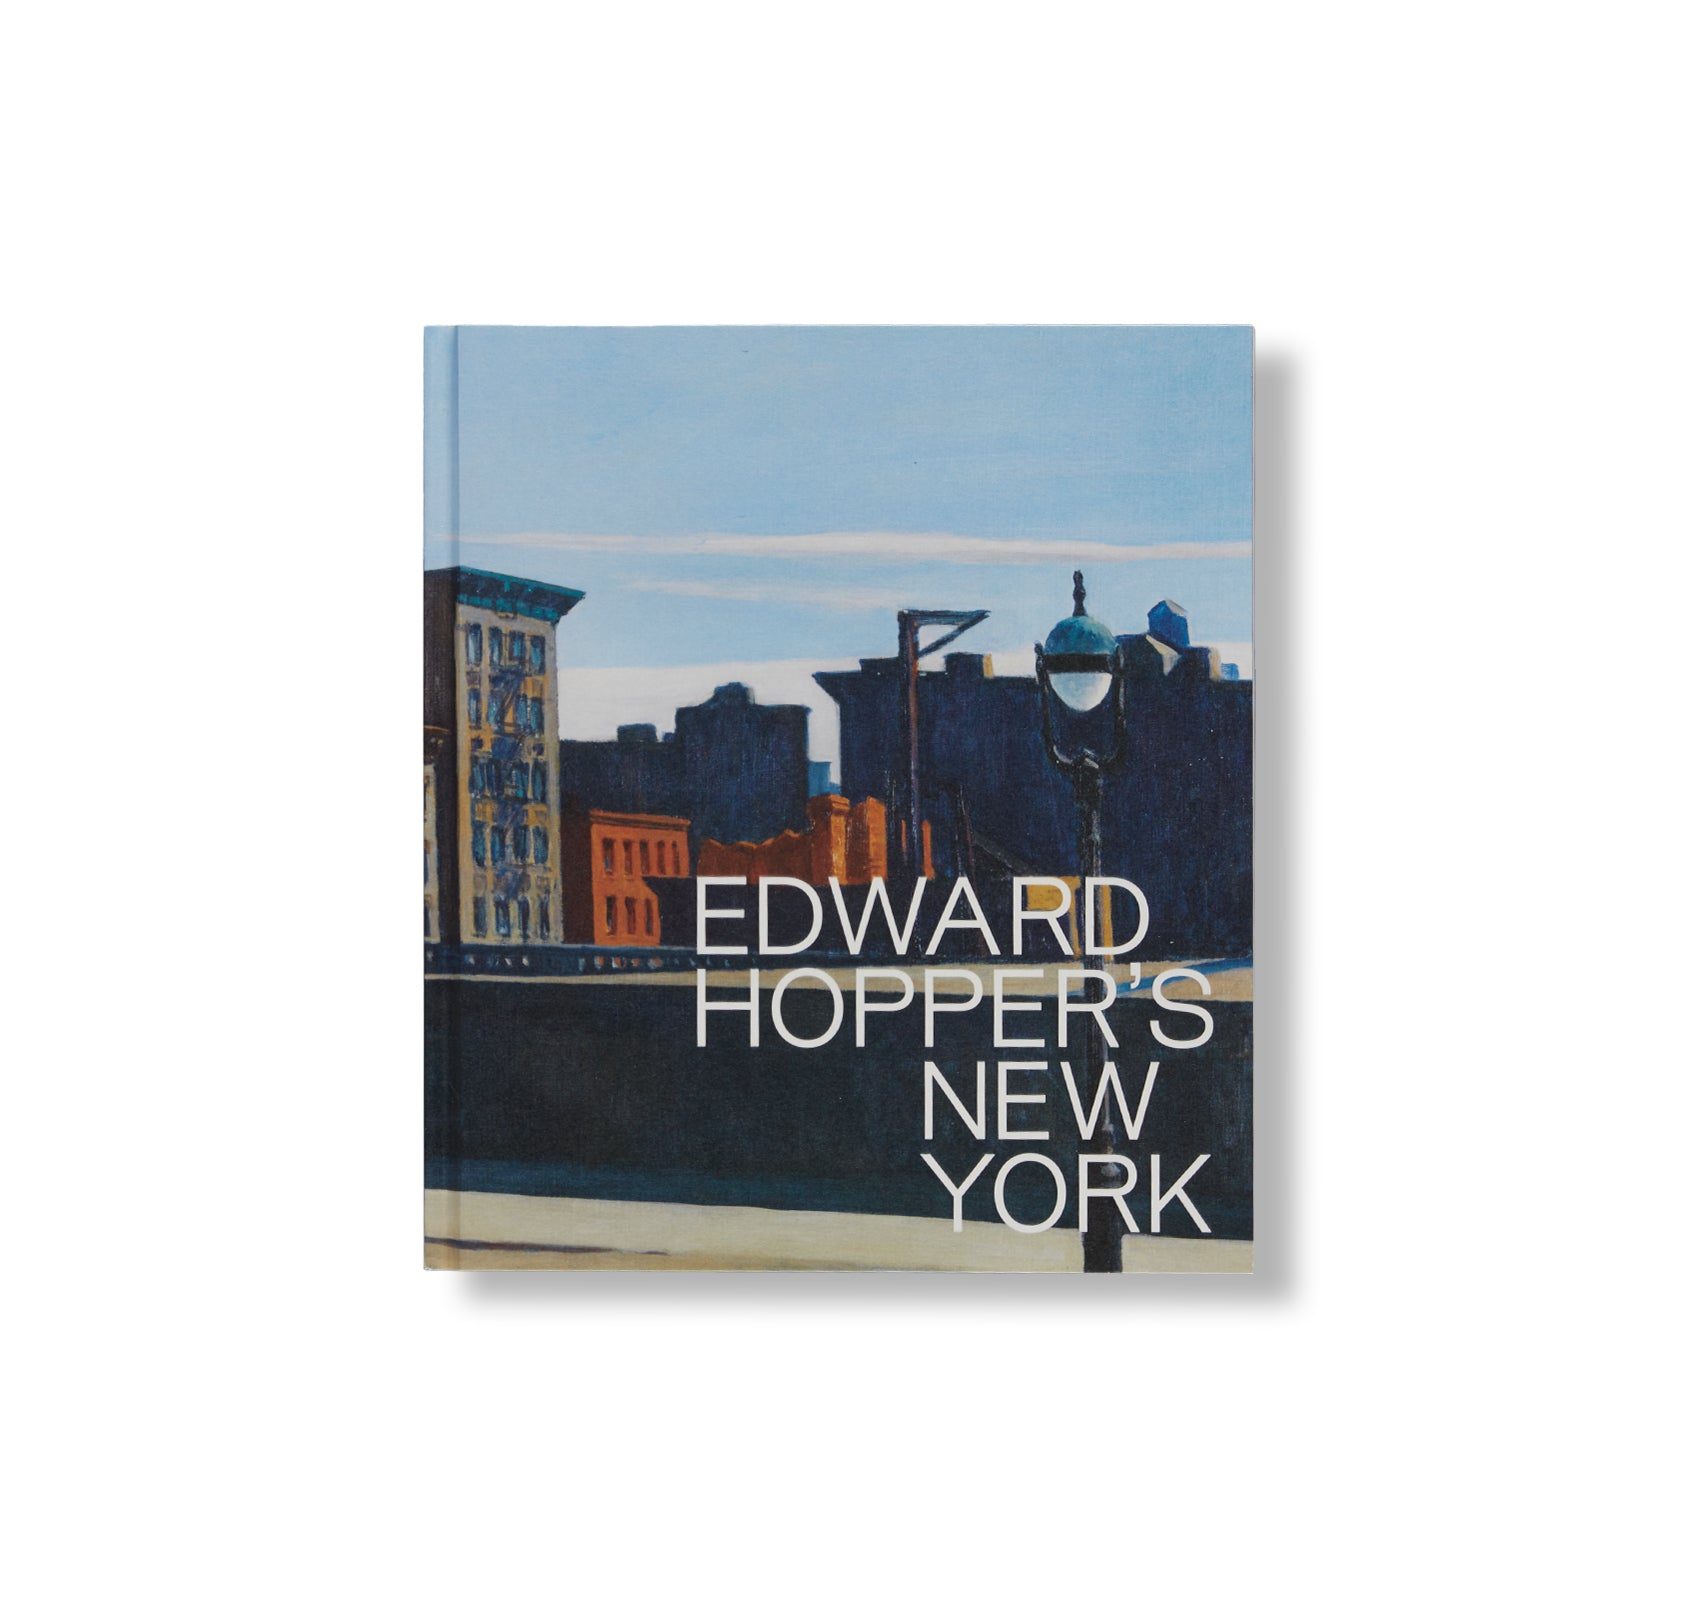 EDWARD HOPPER'S NEW YORK by Edward Hopper